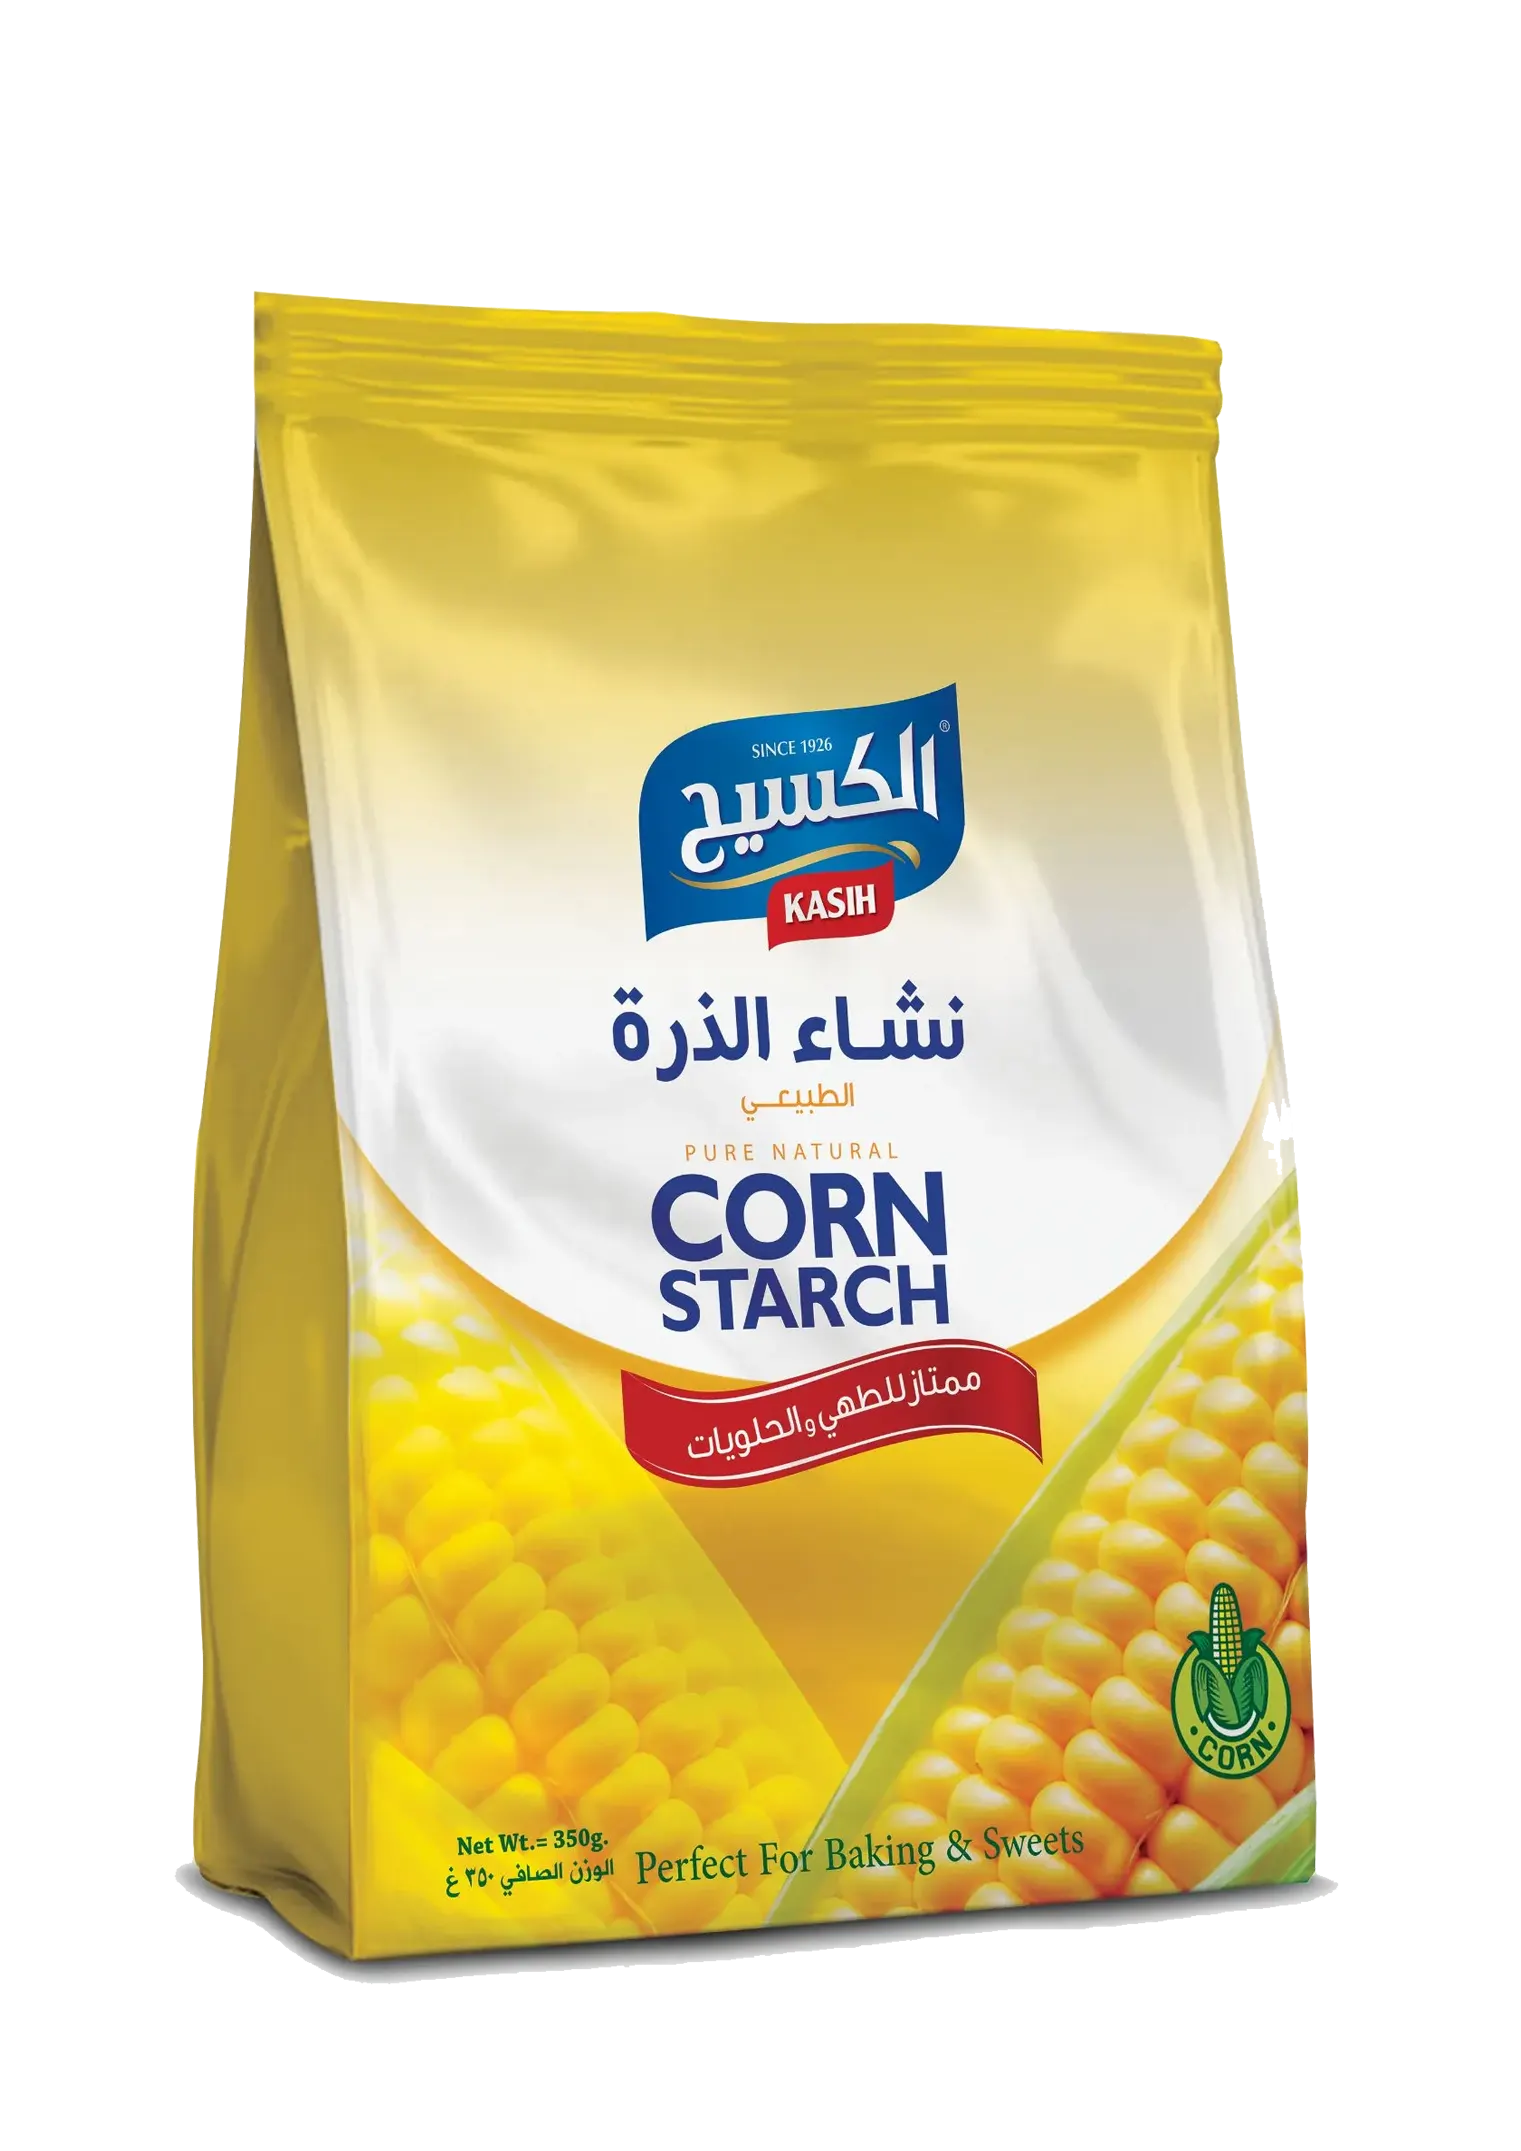 KASIH Corn Starch 